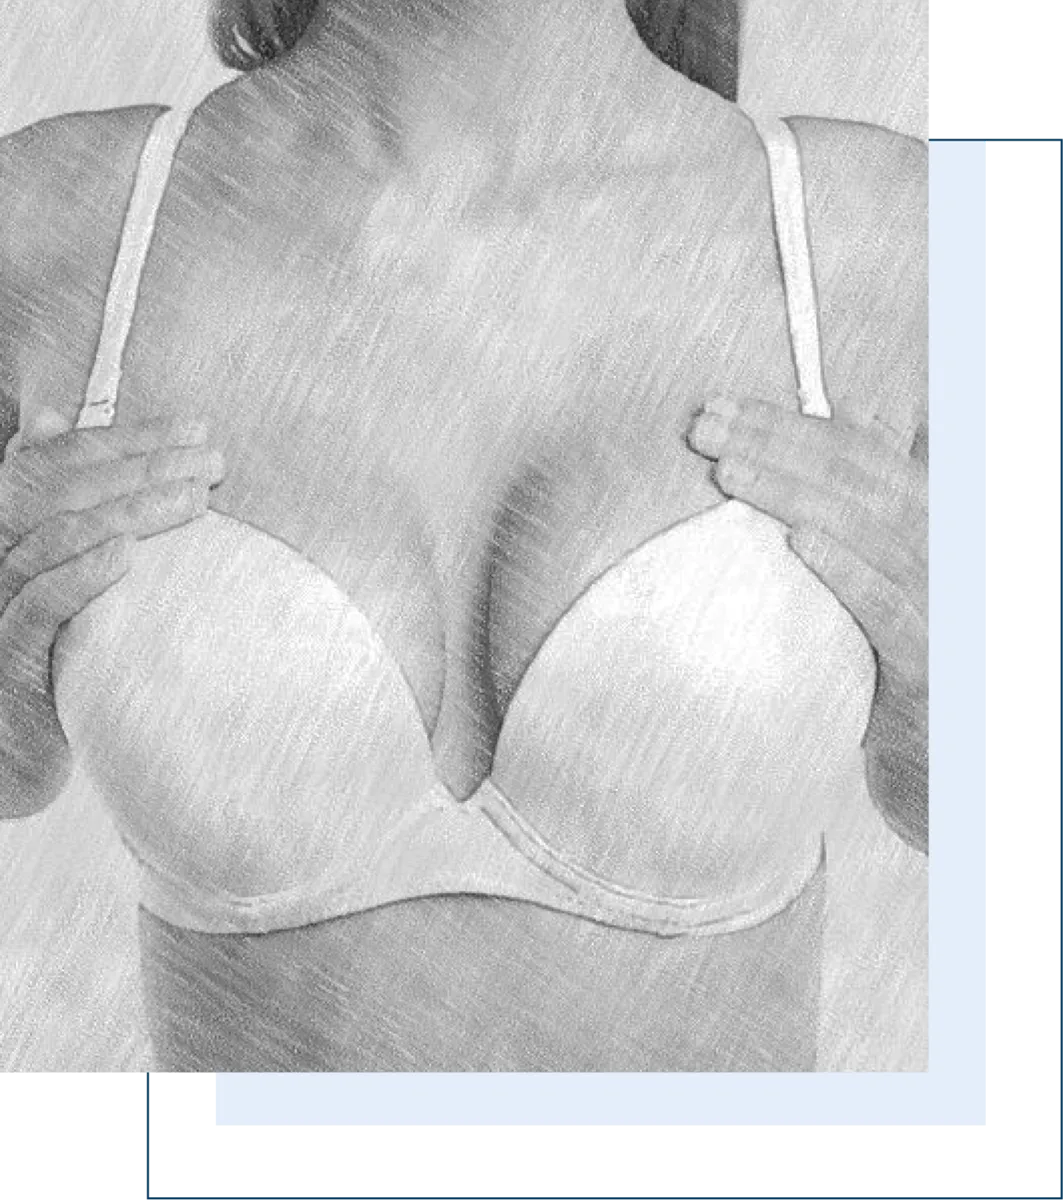 Breast Enlargement Surgery